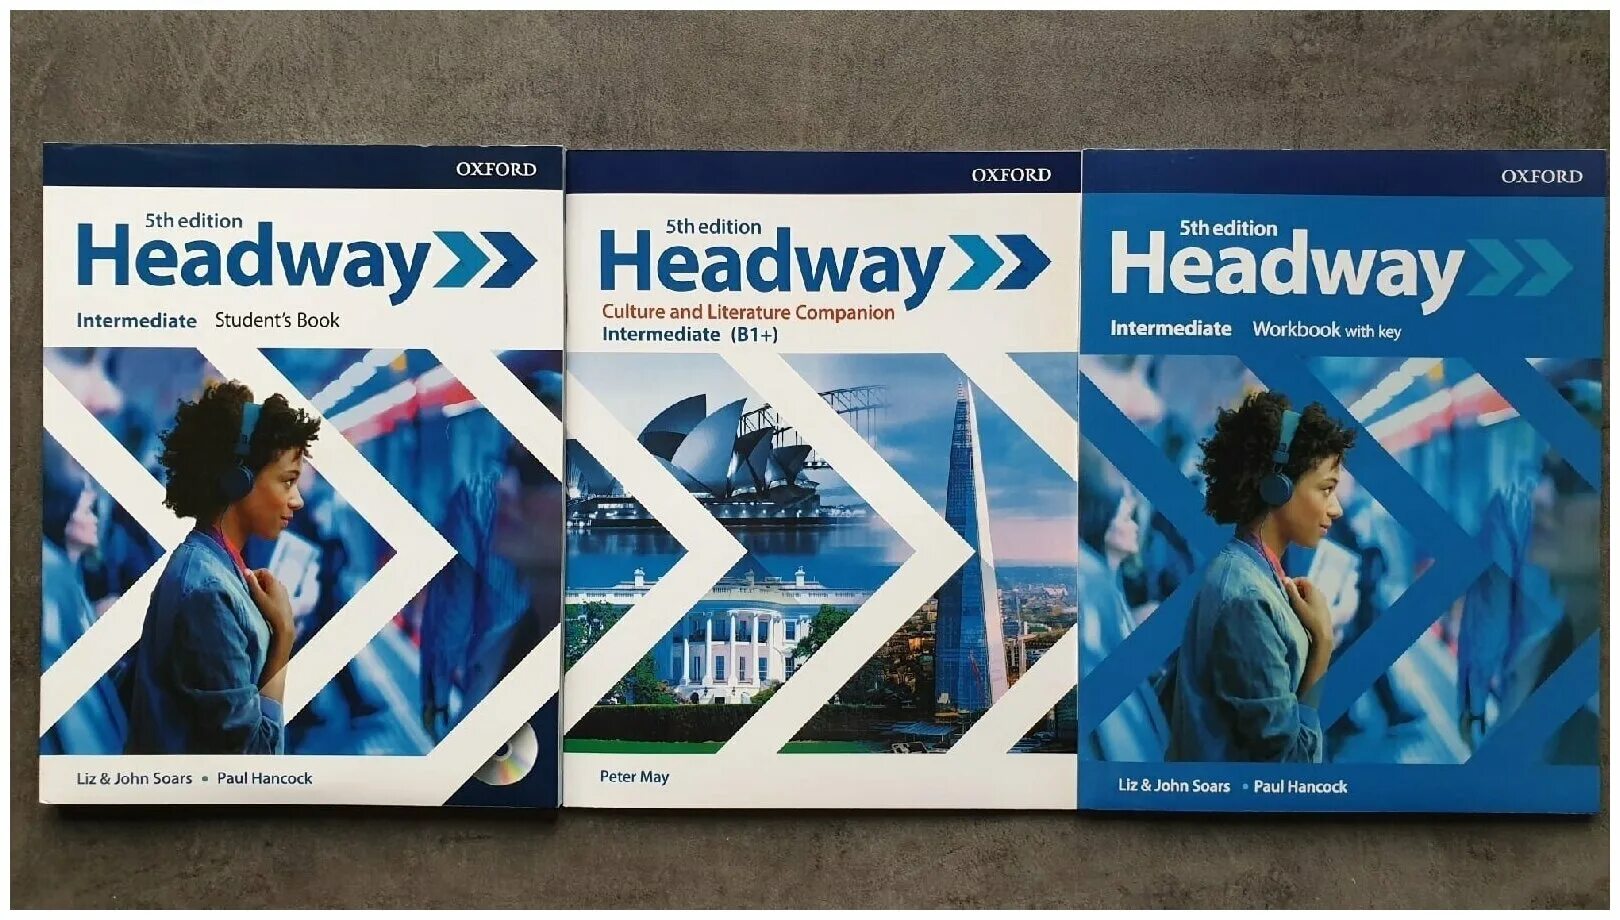 Headway intermediate student s book. Oxford 5th Edition Headway. Headway 5 Workbook. Headway Intermediate 5th Edition. Headway книга.